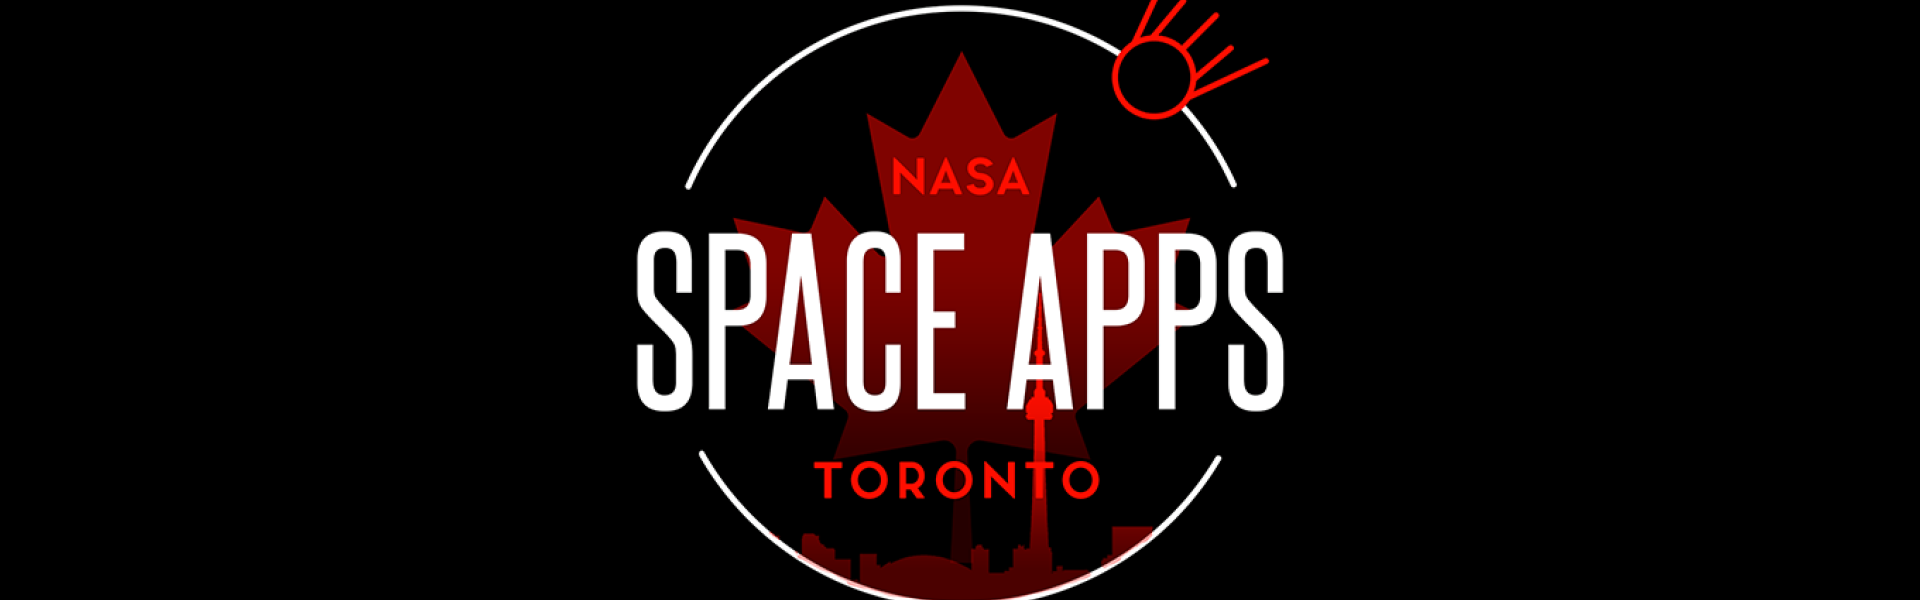 NASA Space Apps Toronto